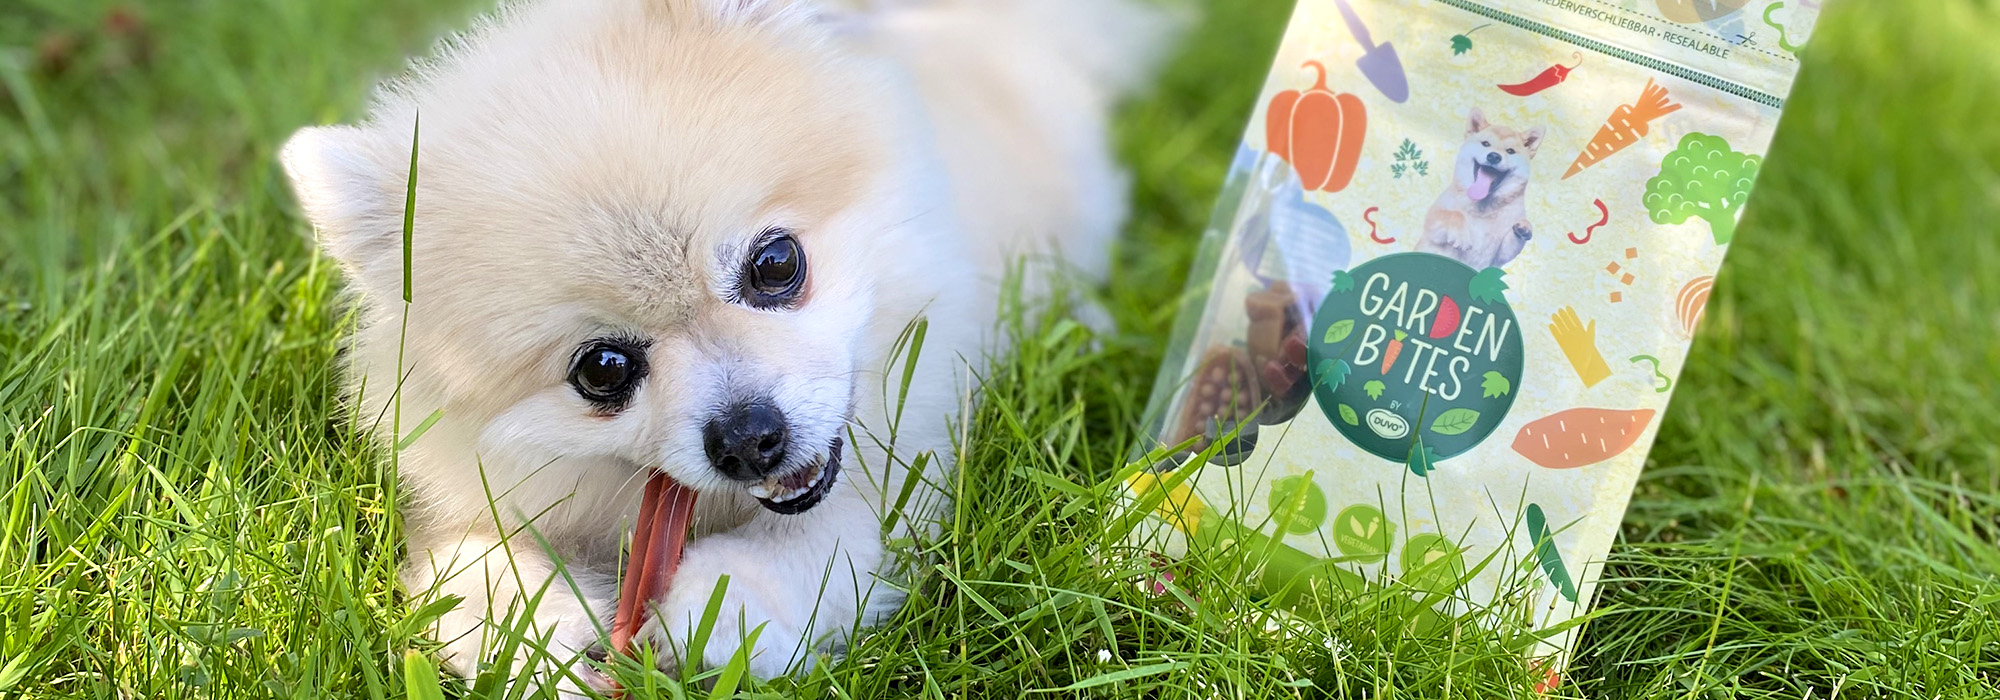 A dog eats a vegetarian snack in a garden